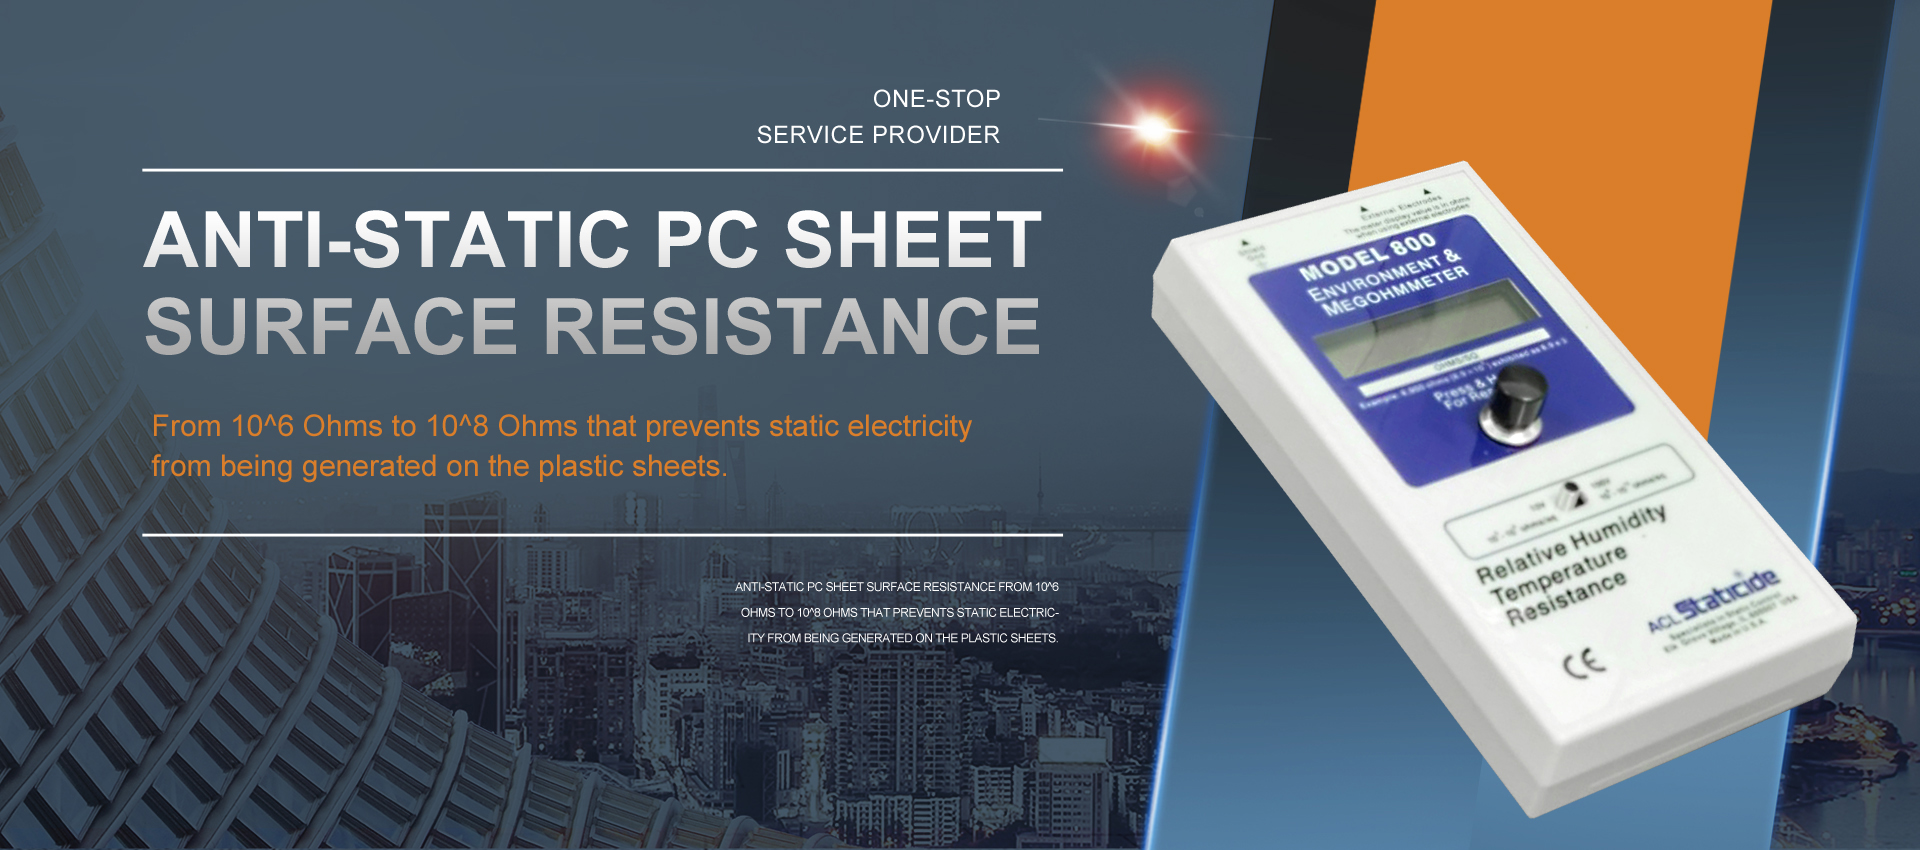 anti-static pc sheet